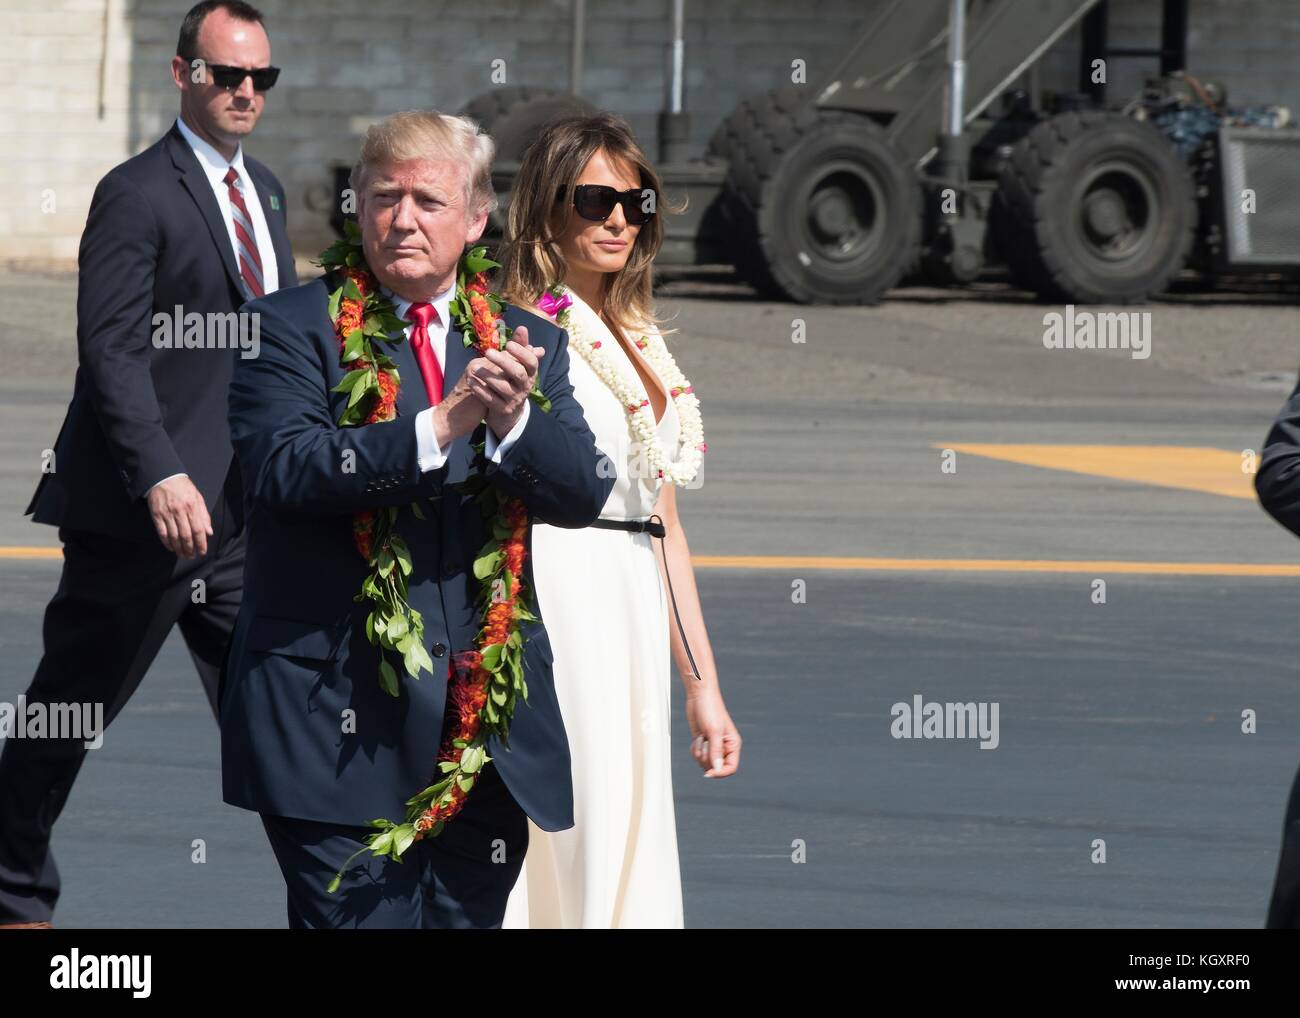 Us-Präsident Donald Trump (links) und die US-amerikanische First Lady melania Trump kommen an der Joint Base Pearl Harbor - hickam November 3, 2017 in Pearl Harbor, Hawaii. (Foto von corwin Colbert über planetpix) Stockfoto